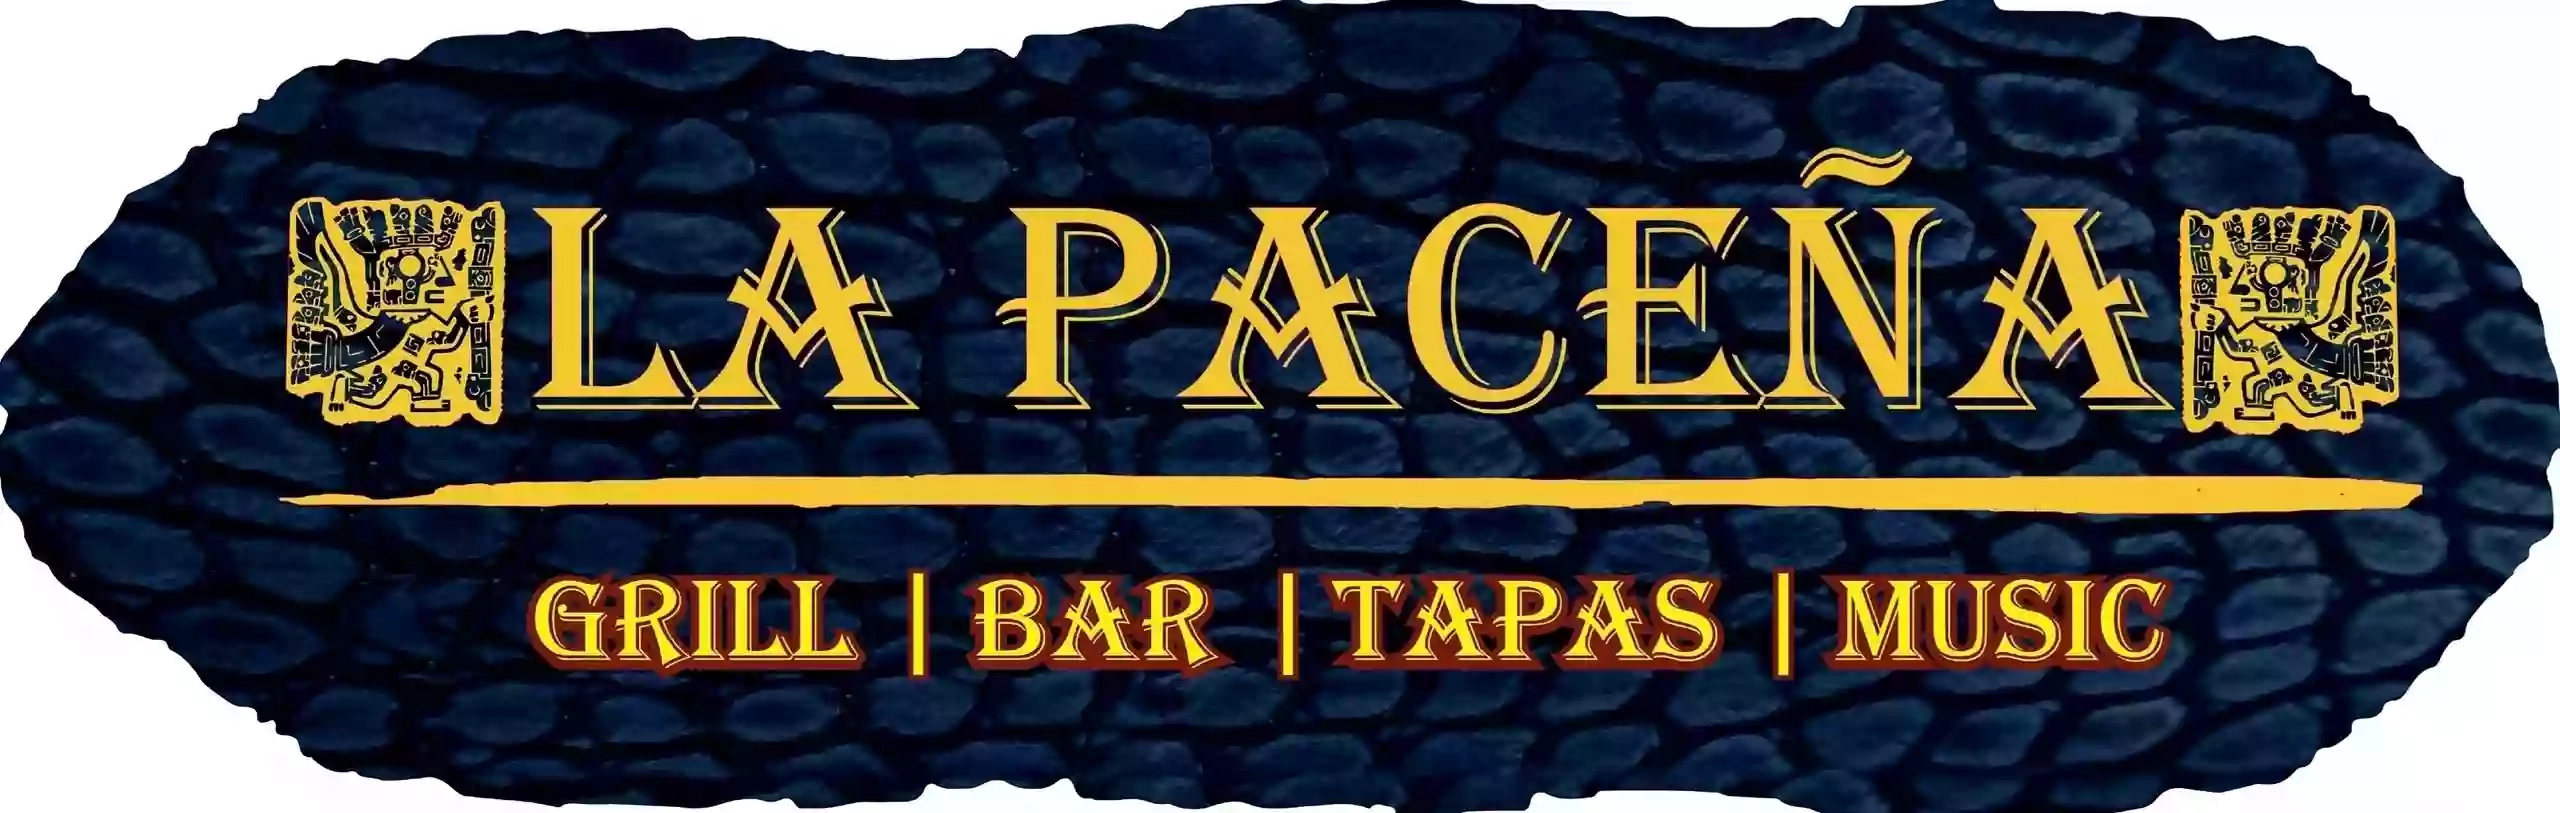 La Paceña Grill Tapas Bar Music